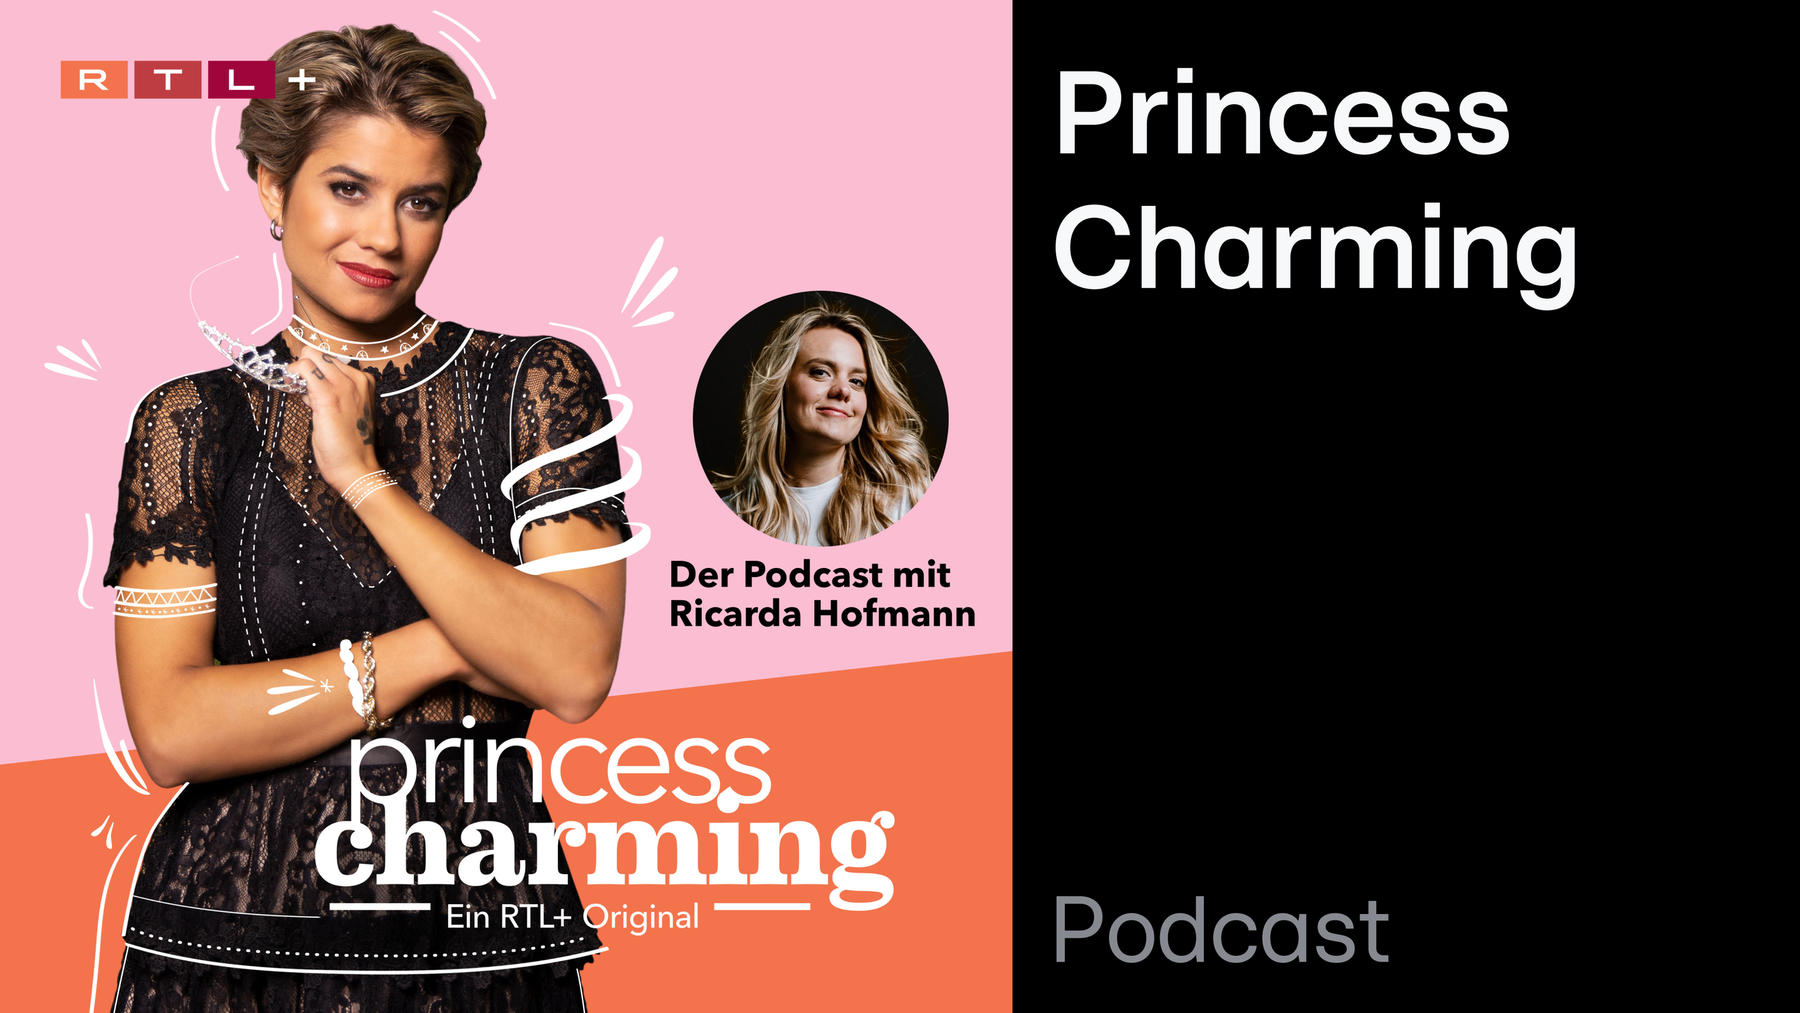 Podcast: Princess Charming